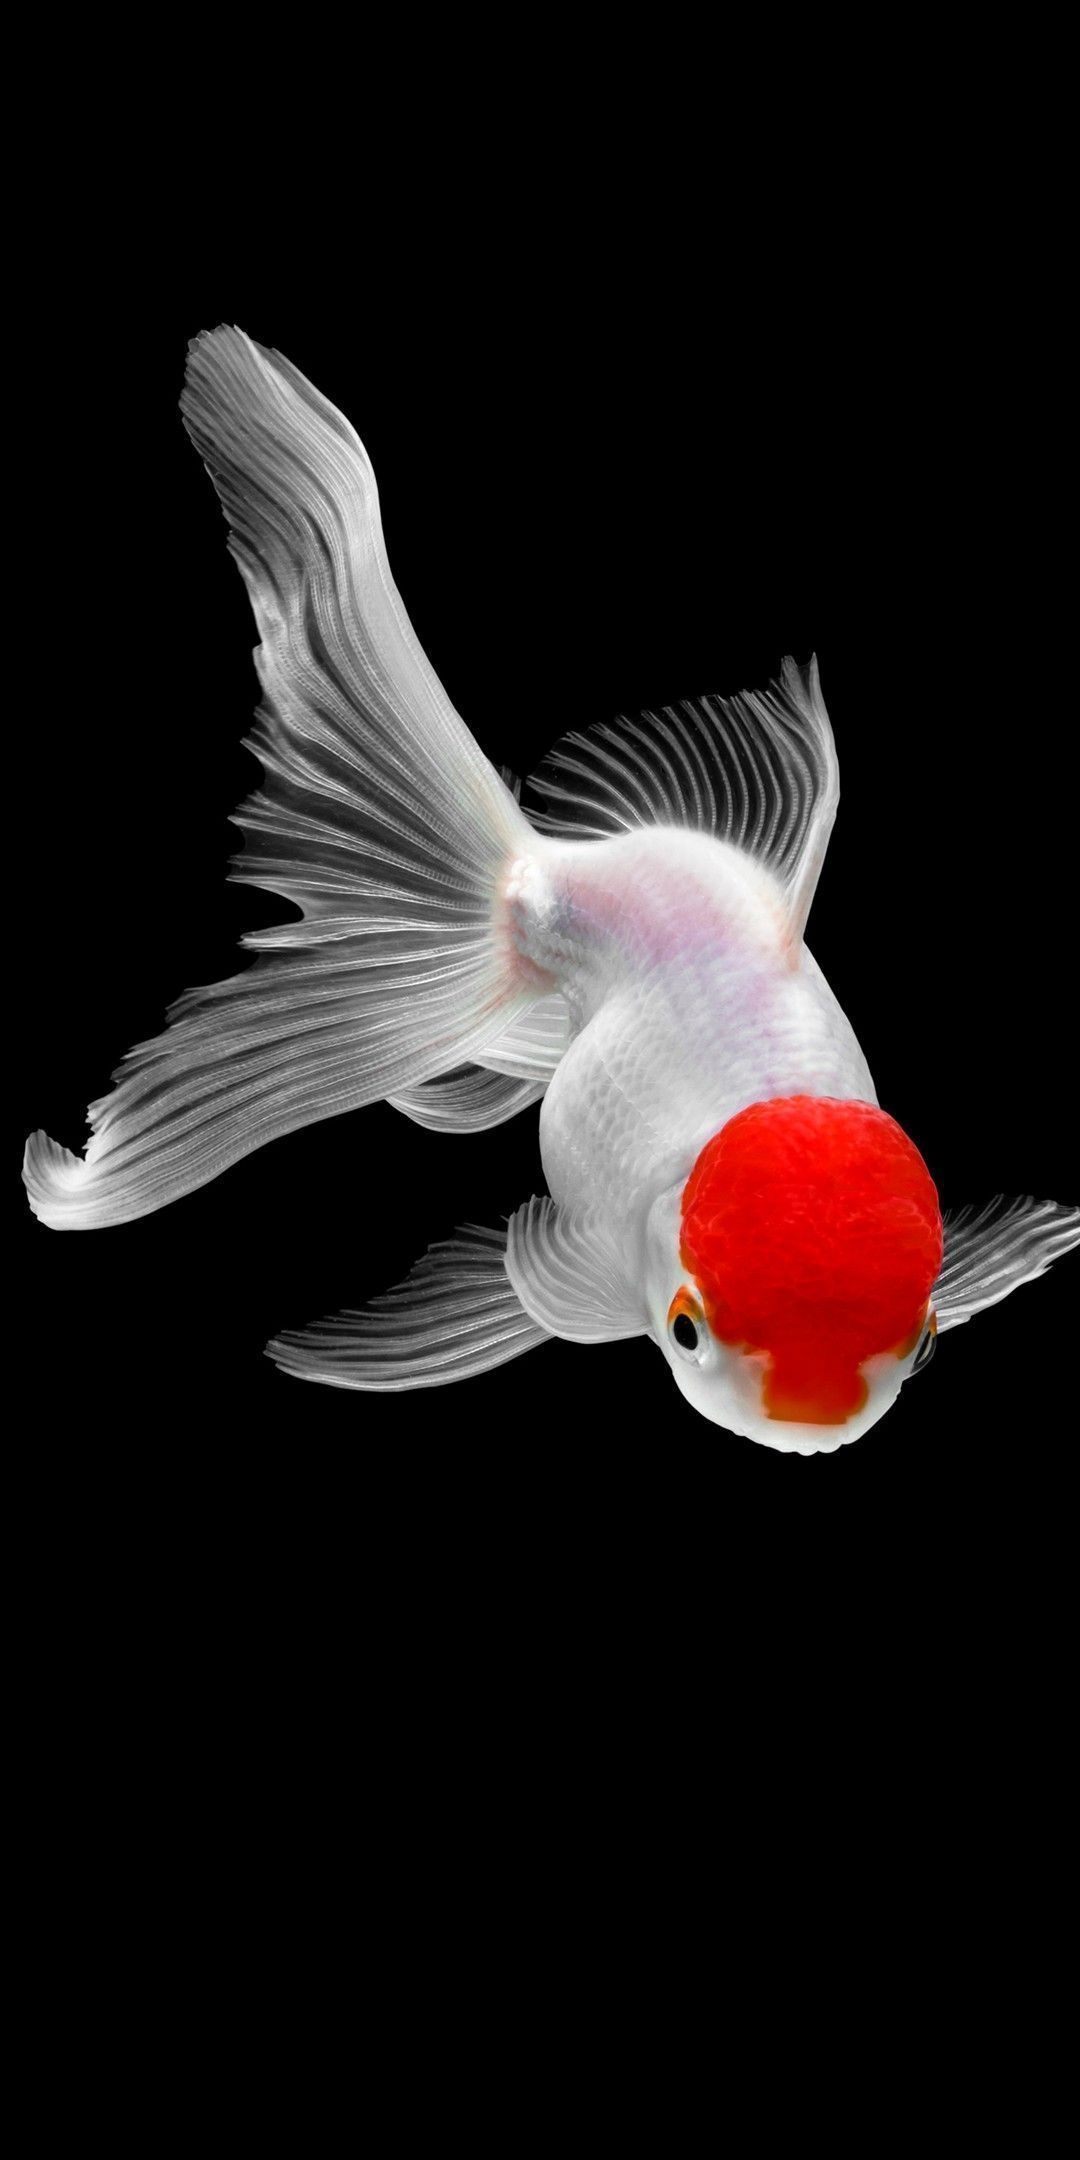 Goldfish: An ornamental aquarium and pond fish of the carp family. 1080x2160 HD Wallpaper.